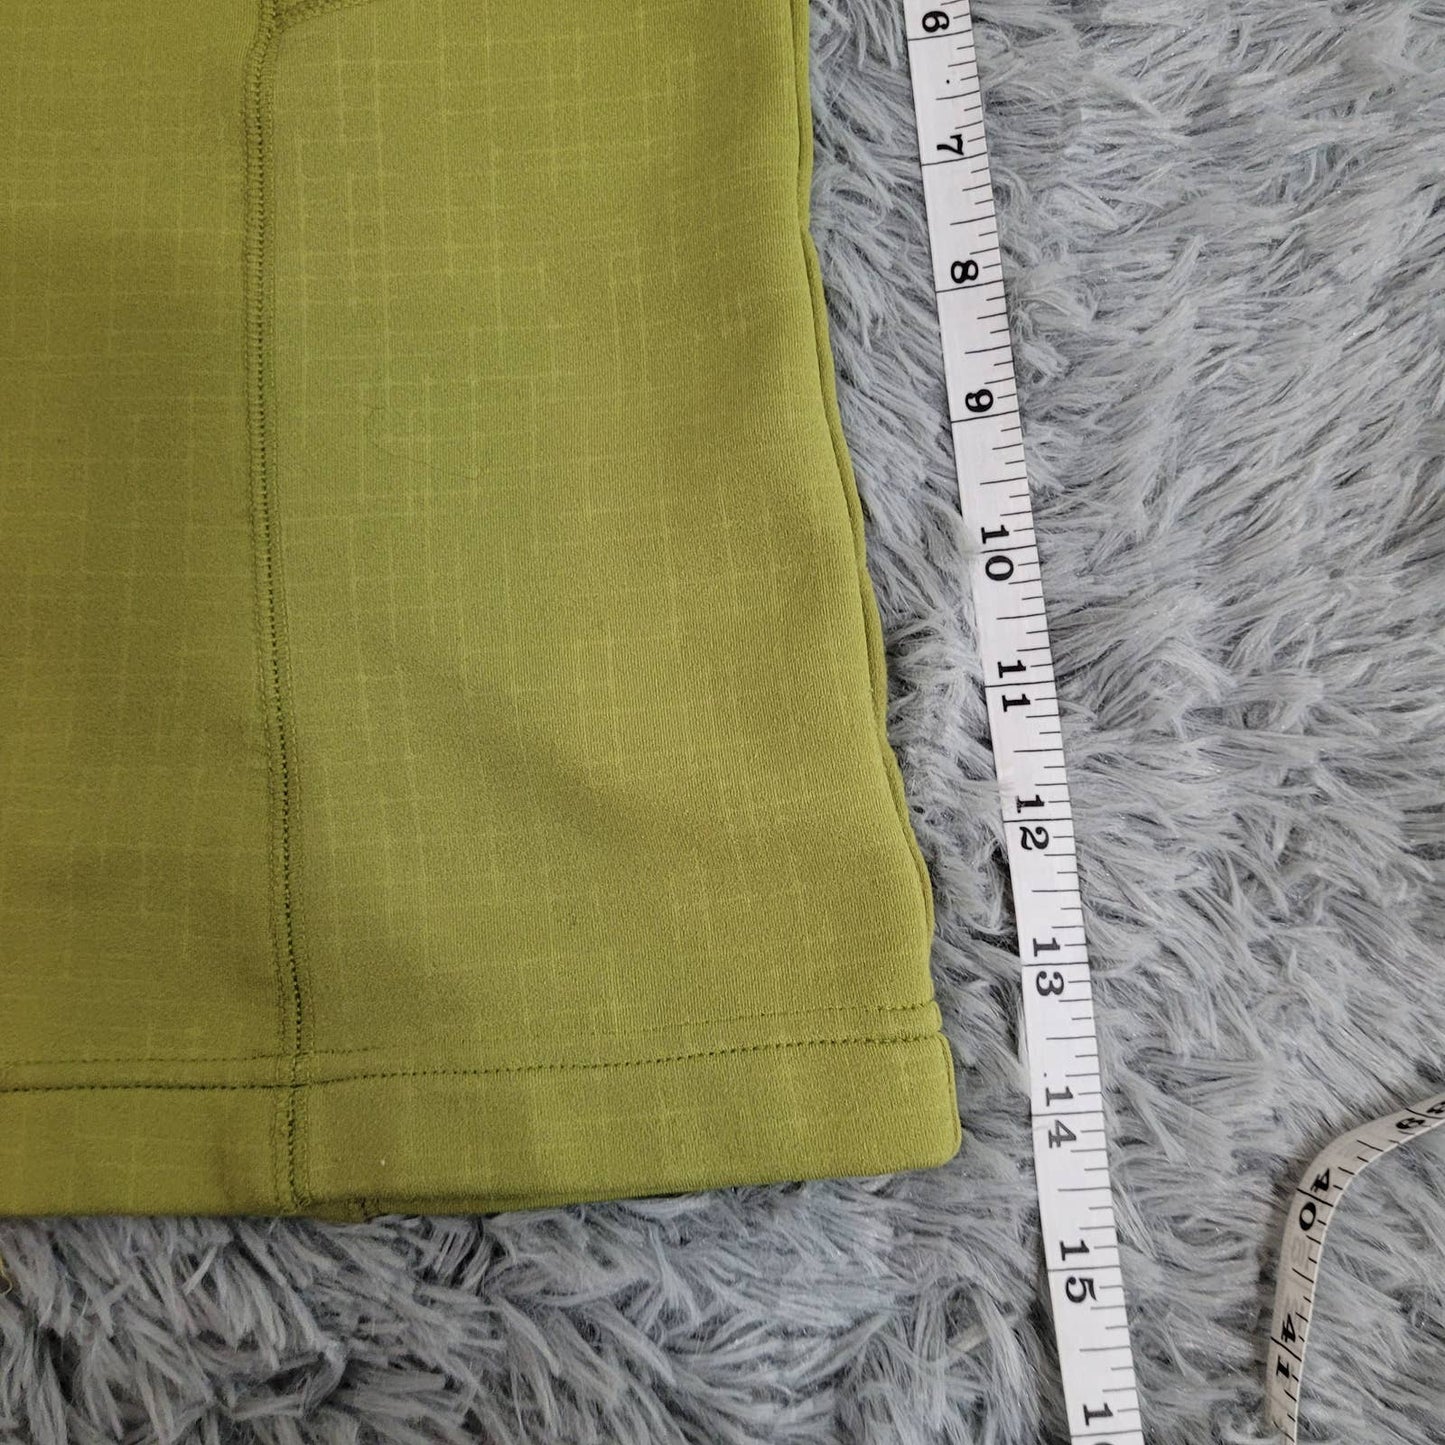 Karbon Green Softshell Sweater - Size Medium